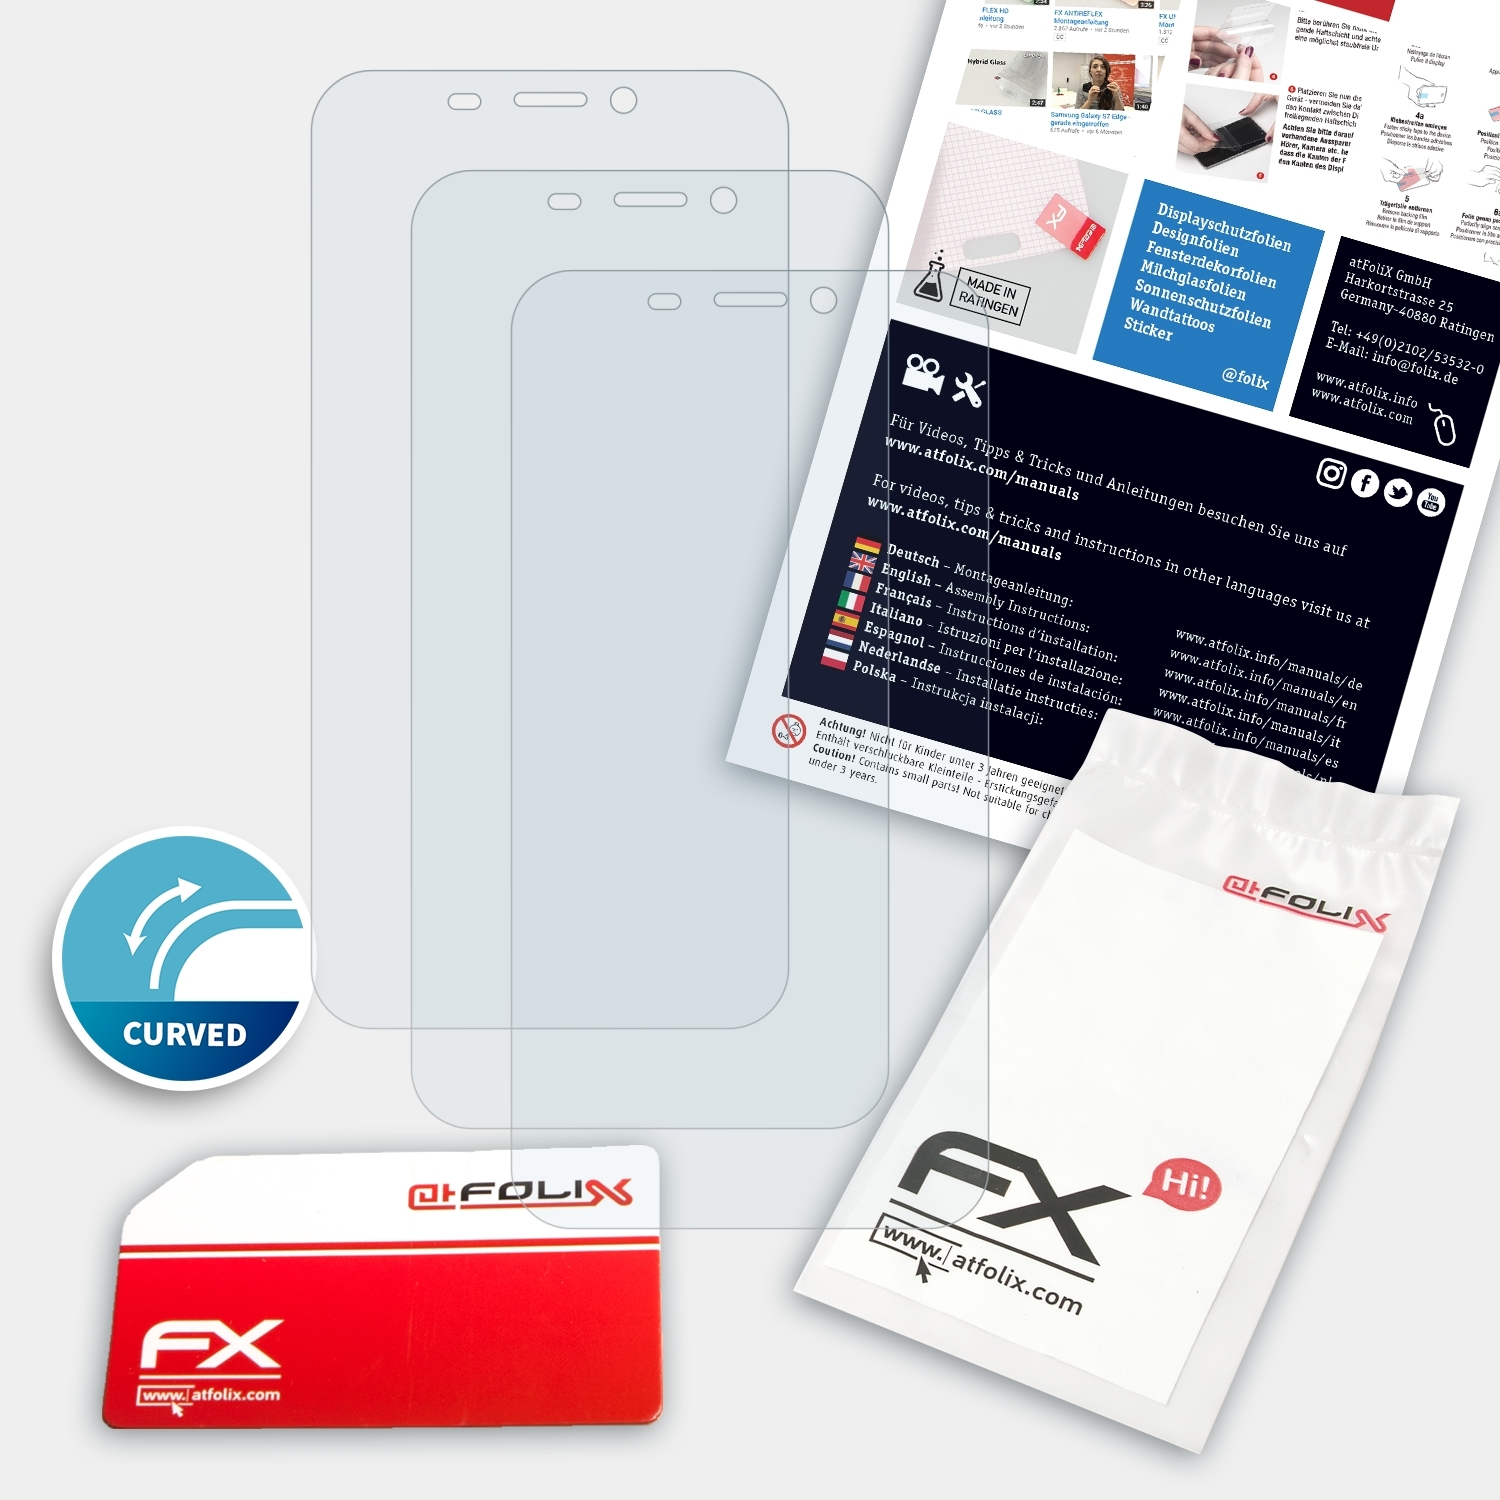 P2 Pro) FX-ActiFleX ATFOLIX Doopro 3x Displayschutz(für